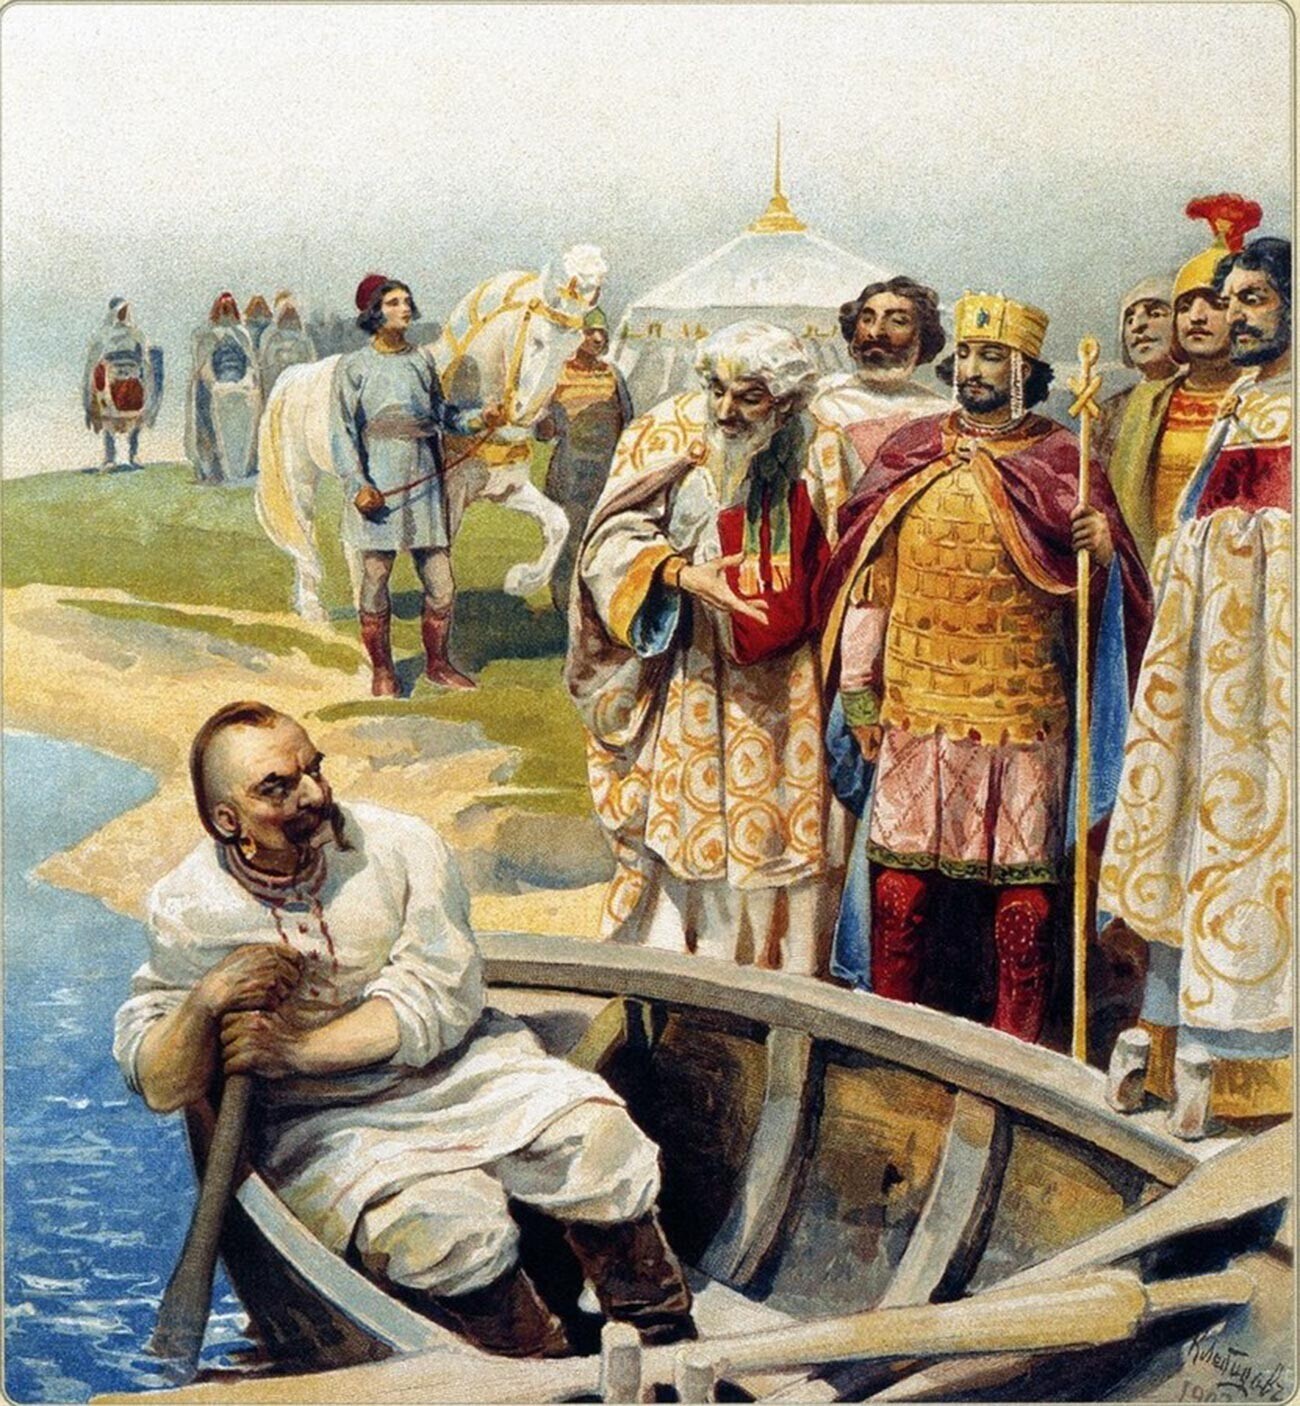 Pertemuan Svyatoslav dengan Kaisar Bizantium Tzimiskes di tepi sungai Donau. Putra Igor dan Olga, Pangeran Svyatoslav menghabiskan seluruh hidupnya dalam kampanye militer. Di antara lawan utama penguasa adalah pengembara Pecheneg, Bulgaria, dan juga Kekaisaran Bizantium.